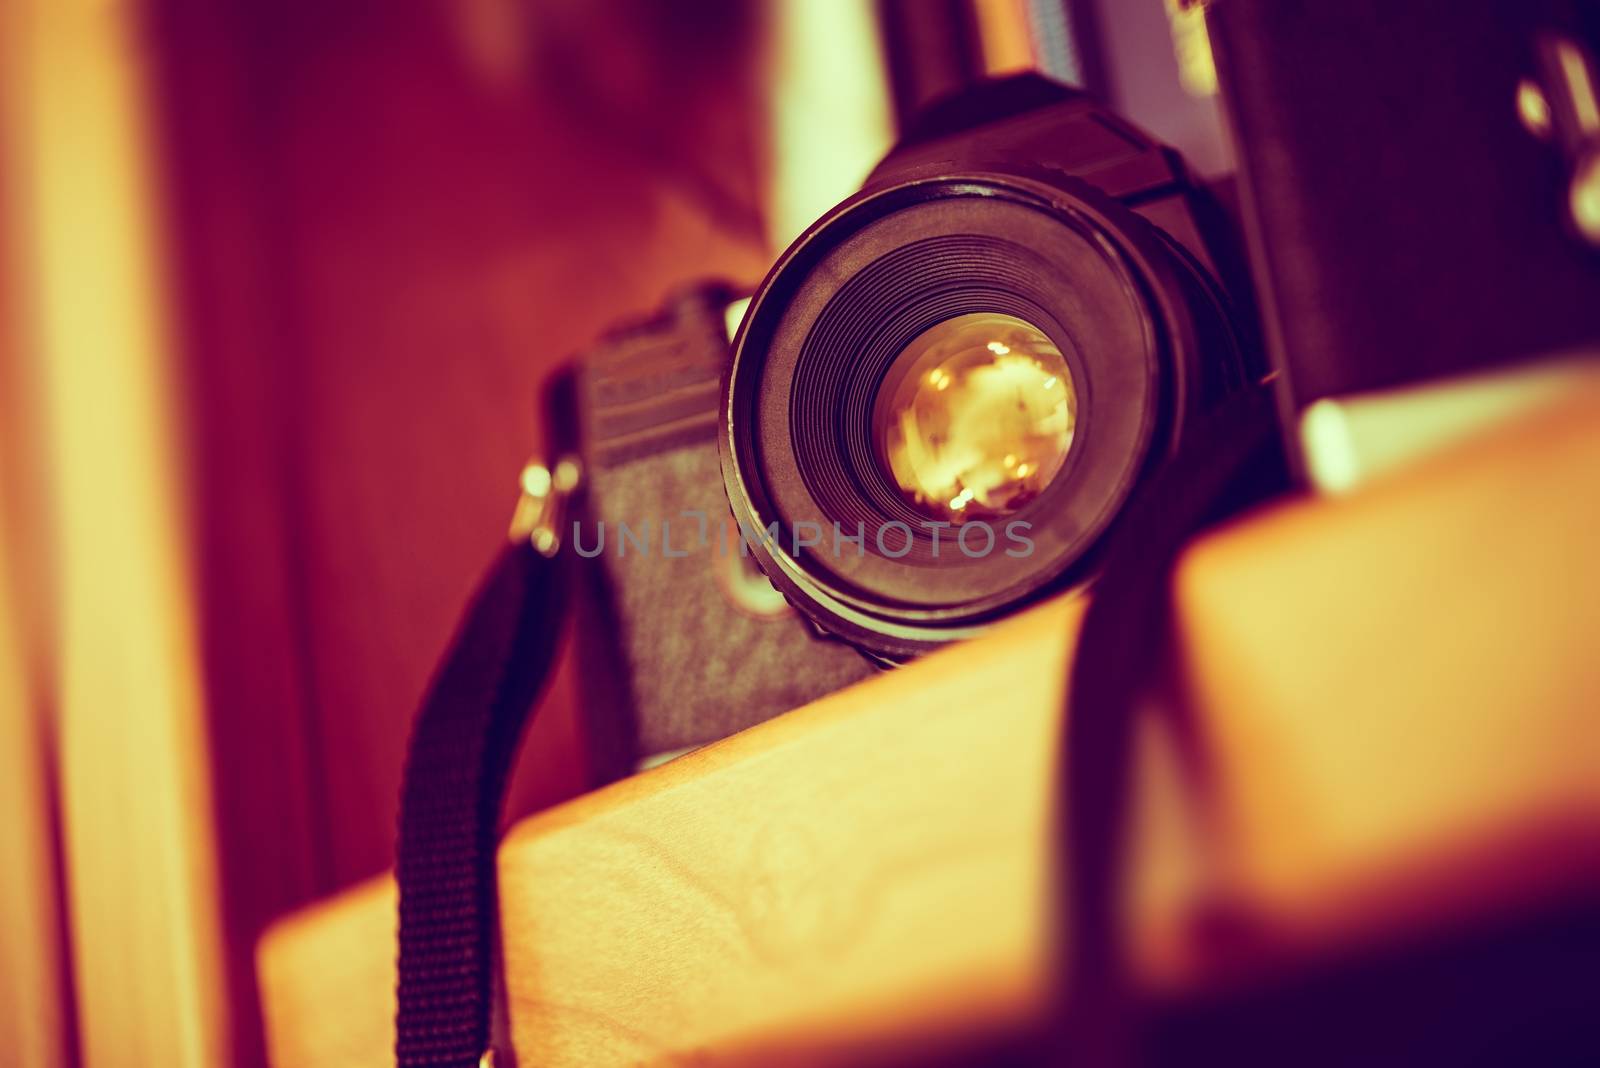 Vintage Film Camera on a Bookshelf. Aged Camera Closeup. Photography Technologies.